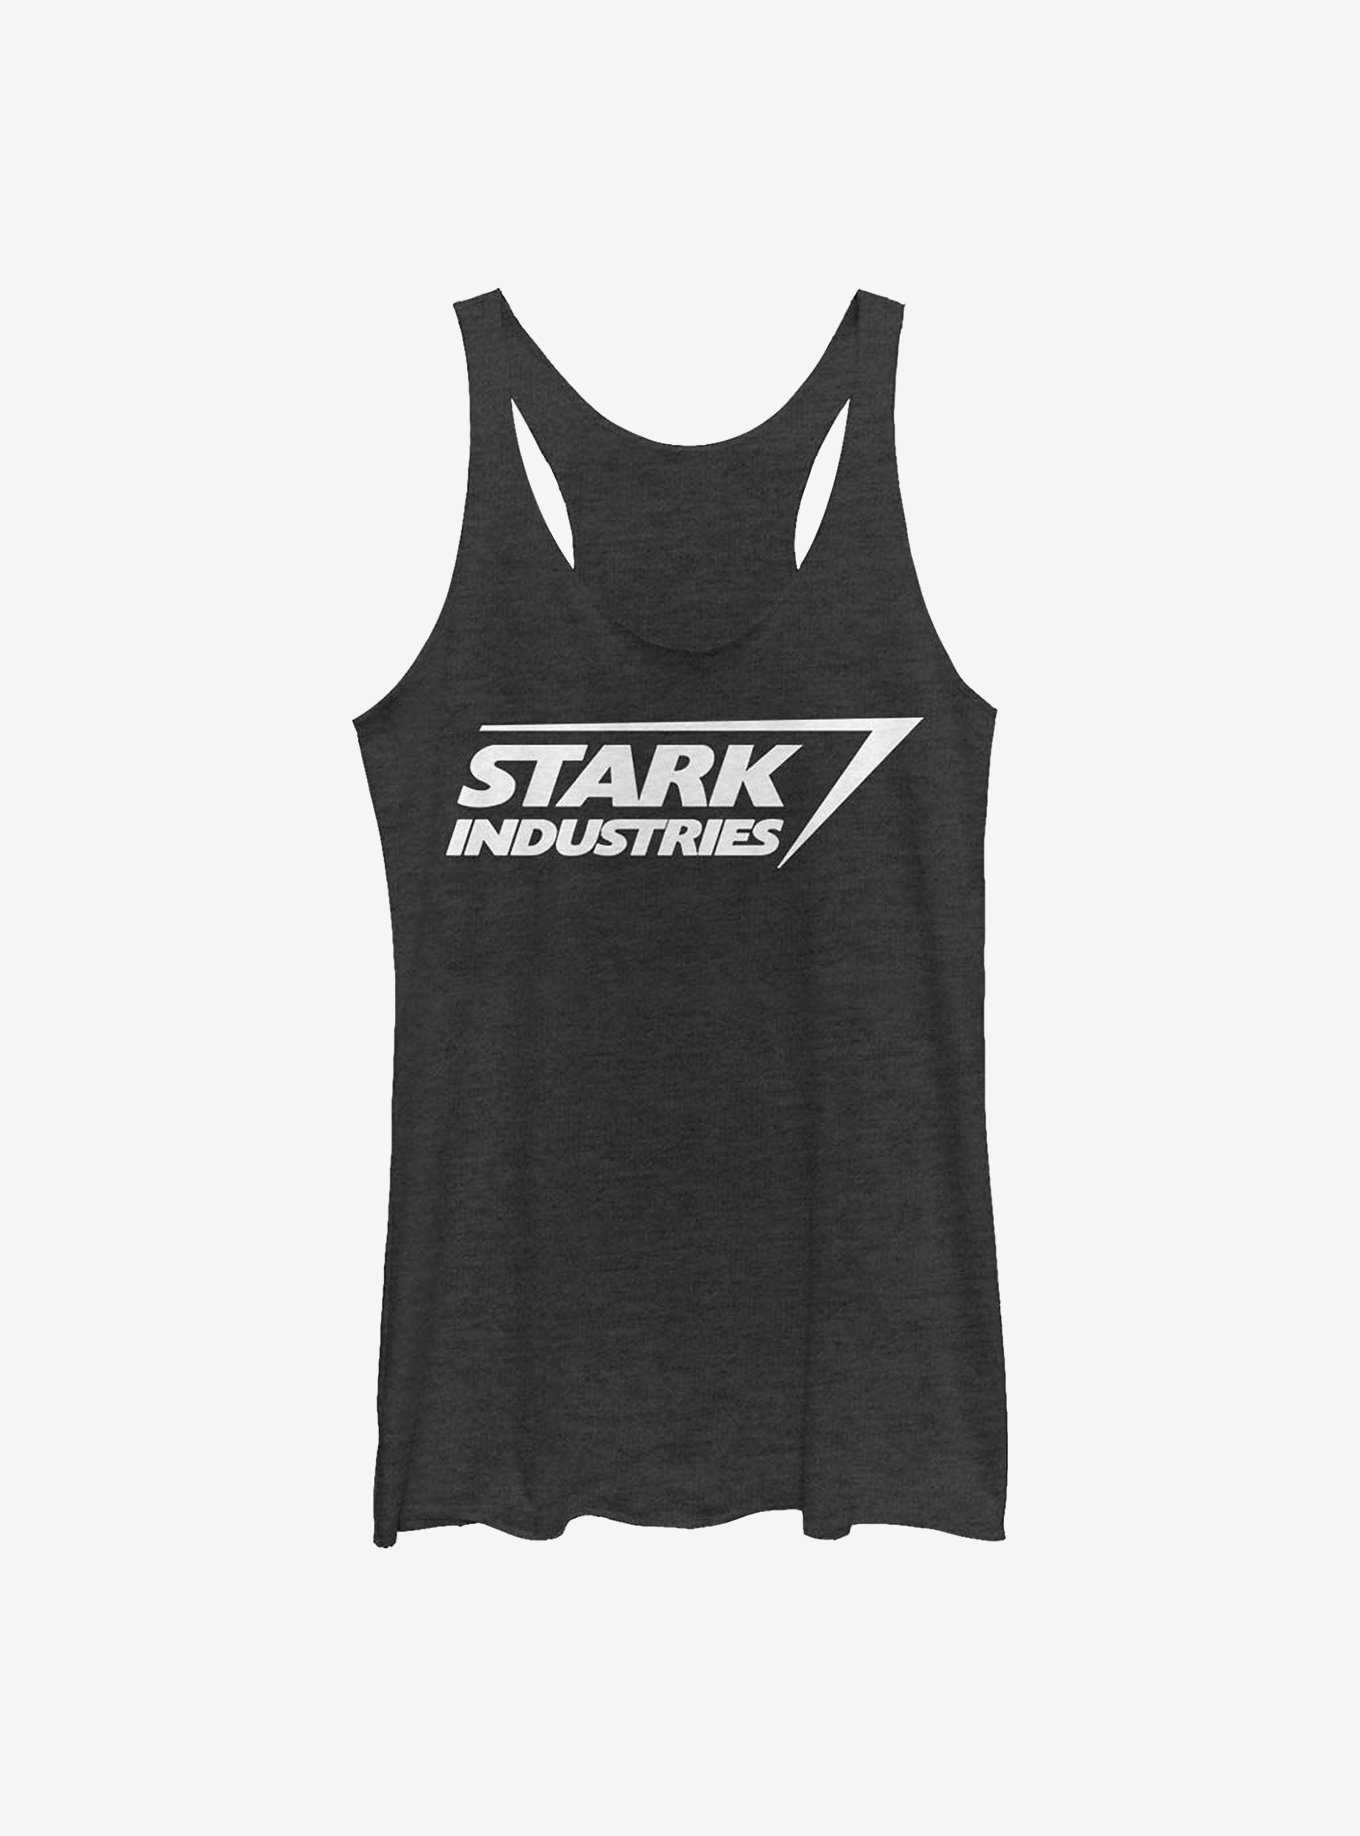 Marvel Iron Man Stark Logo Womens Tank Top, , hi-res